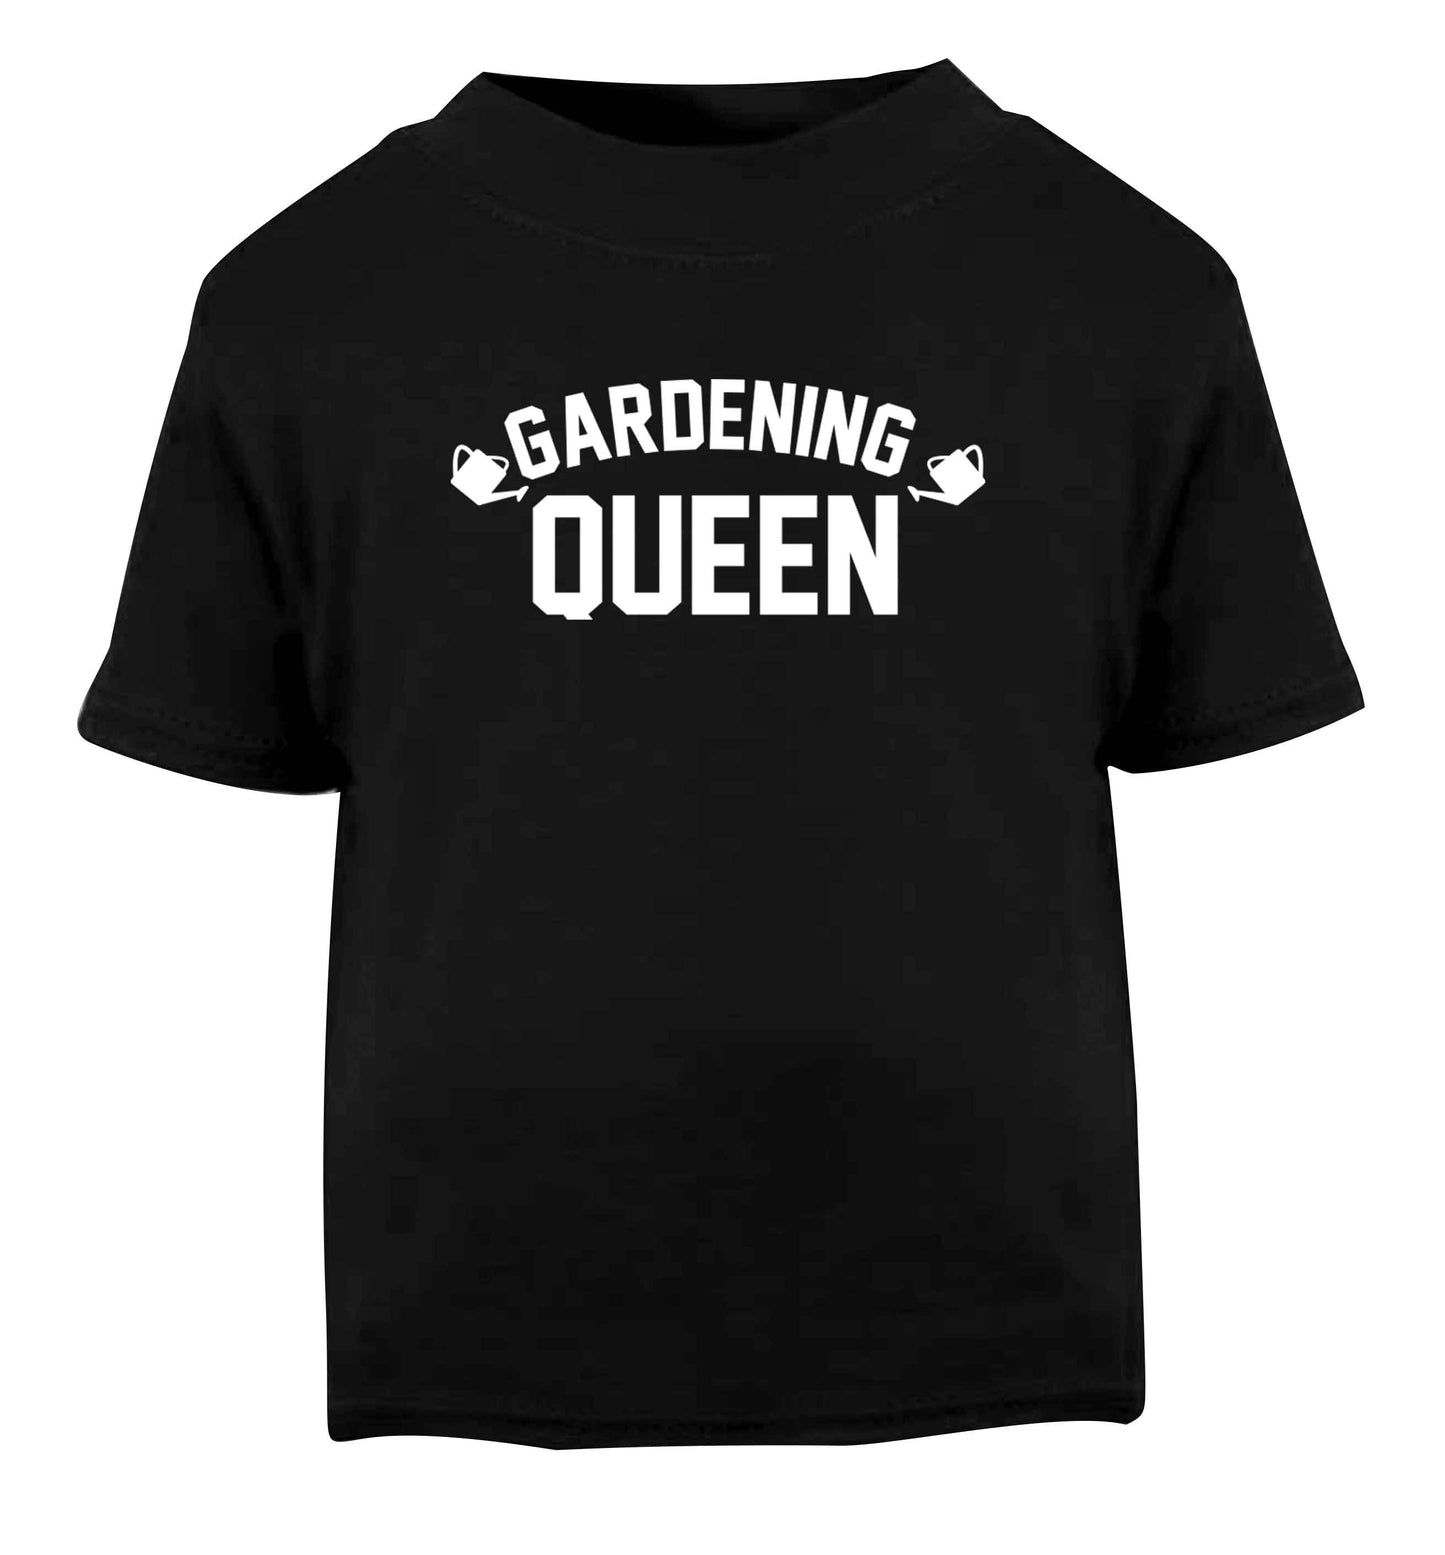 Gardening queen Black Baby Toddler Tshirt 2 years